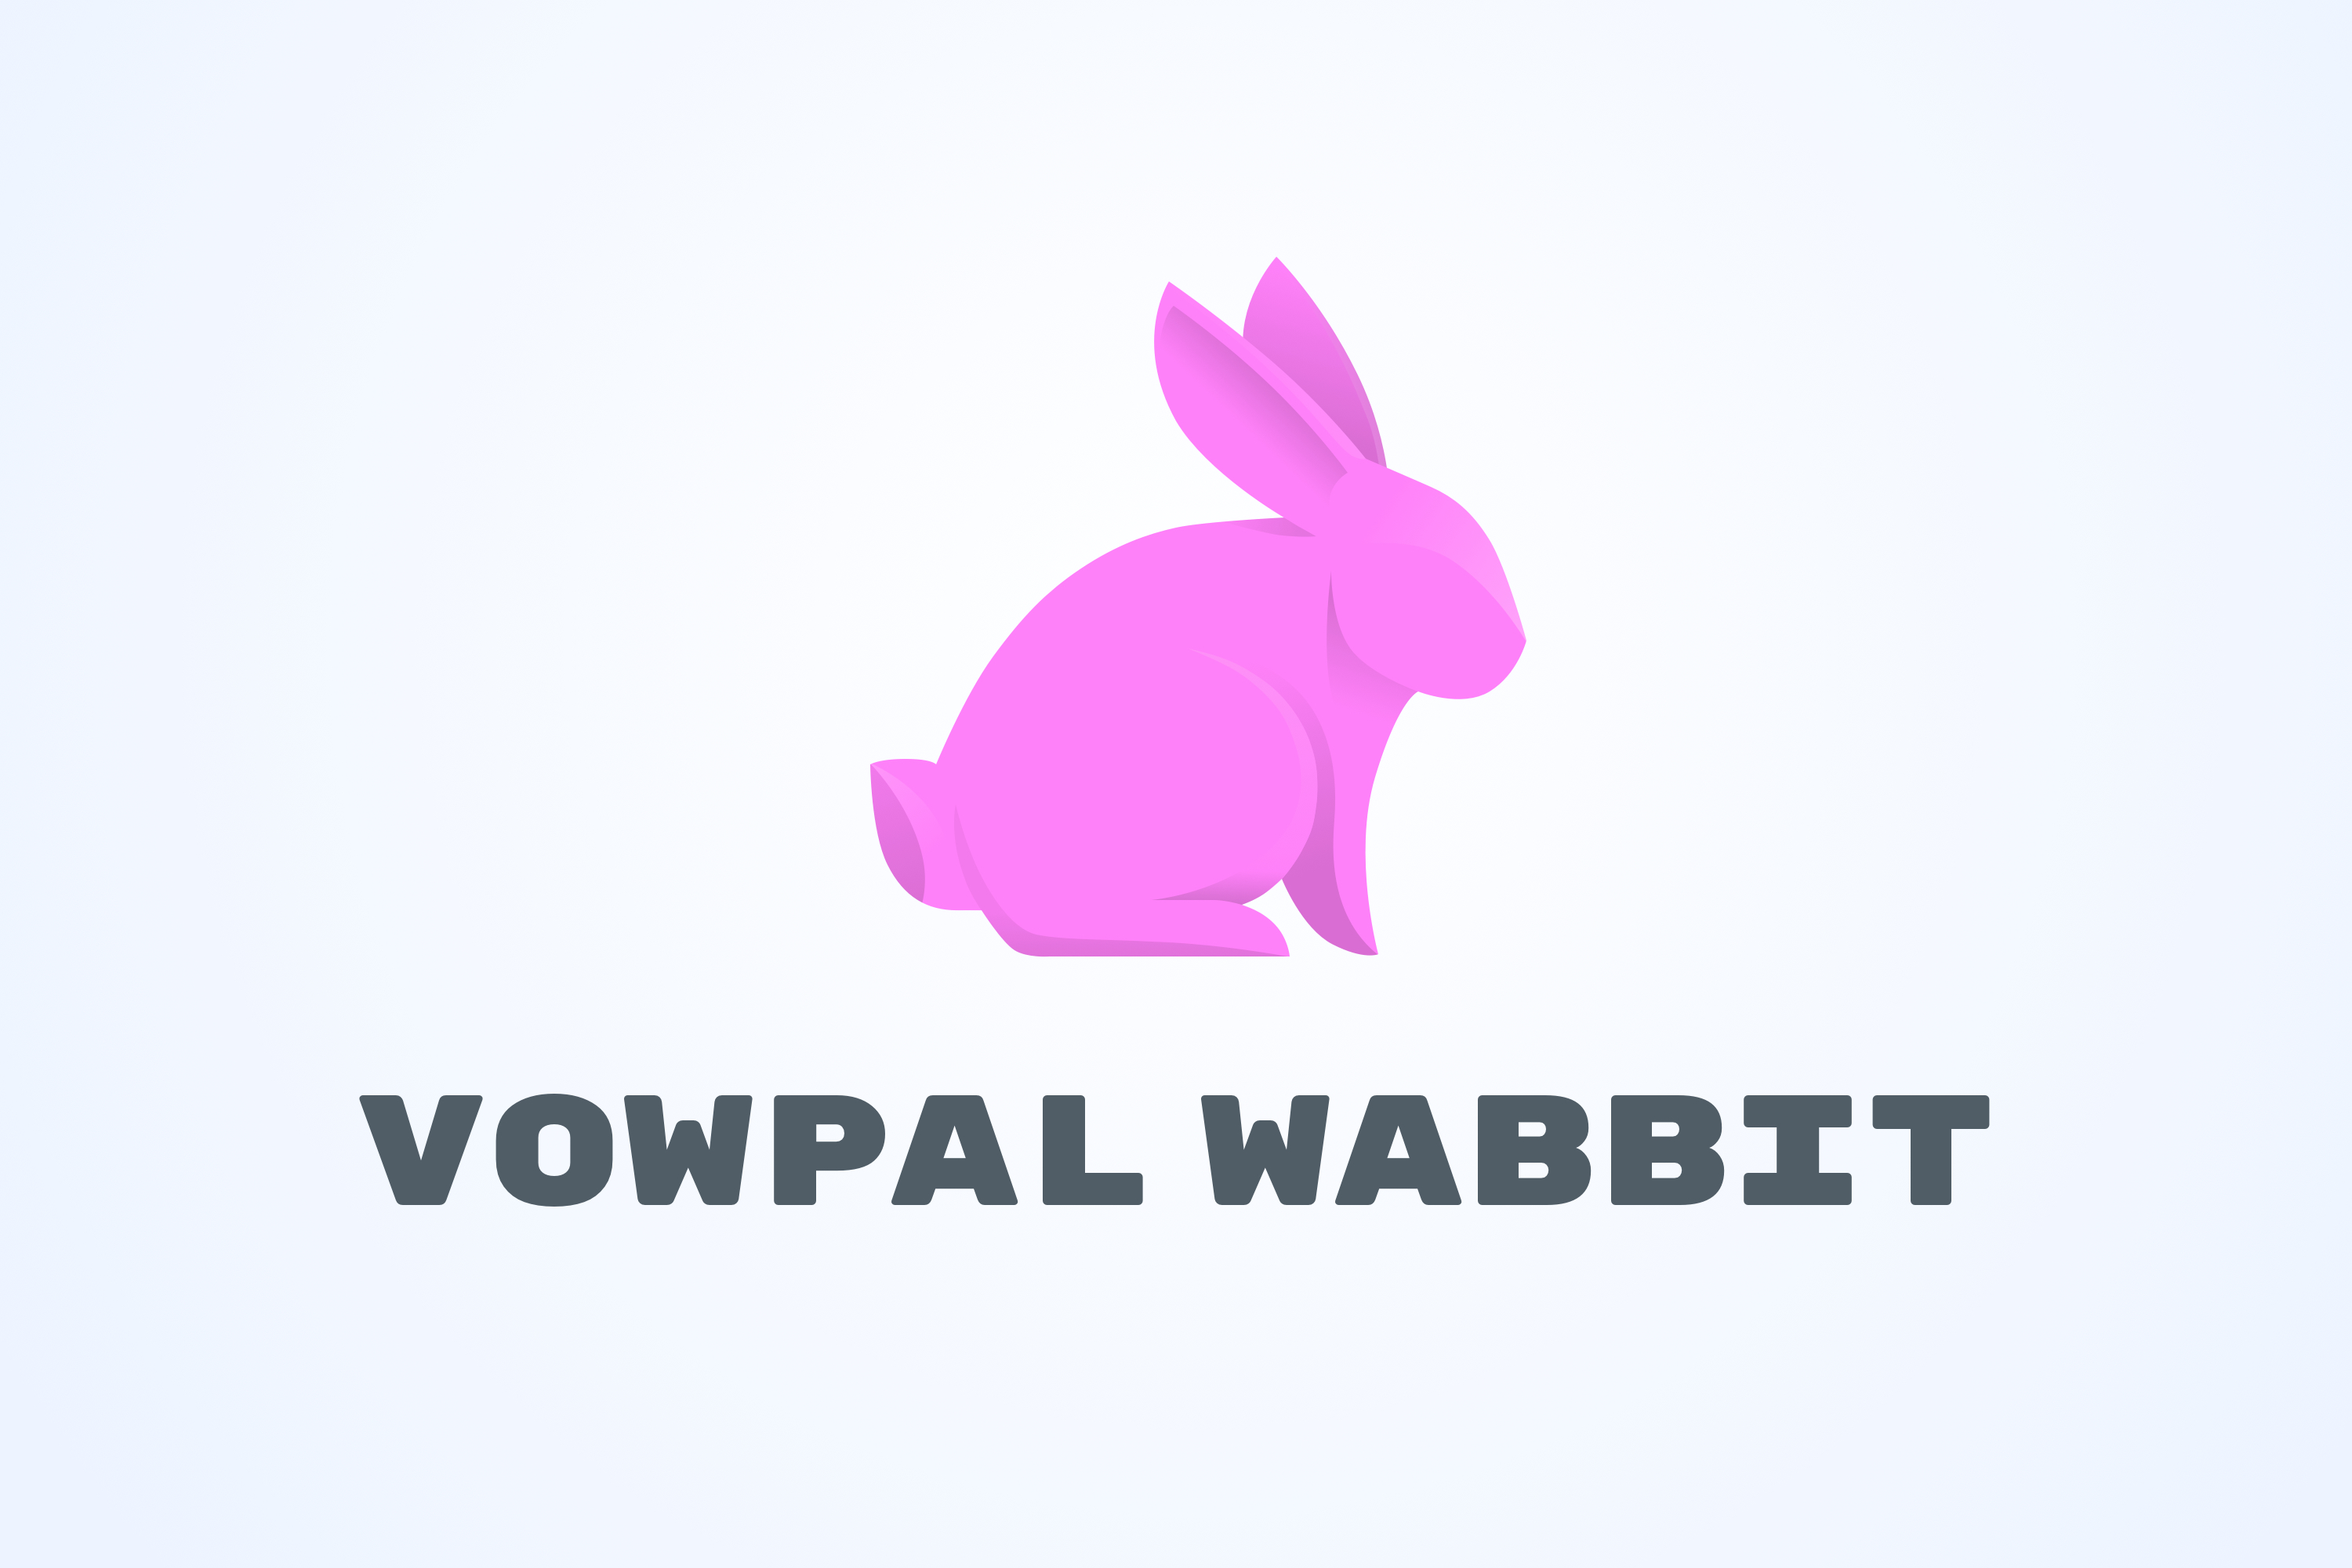 vowpal-wabbits-brand-image.jpg